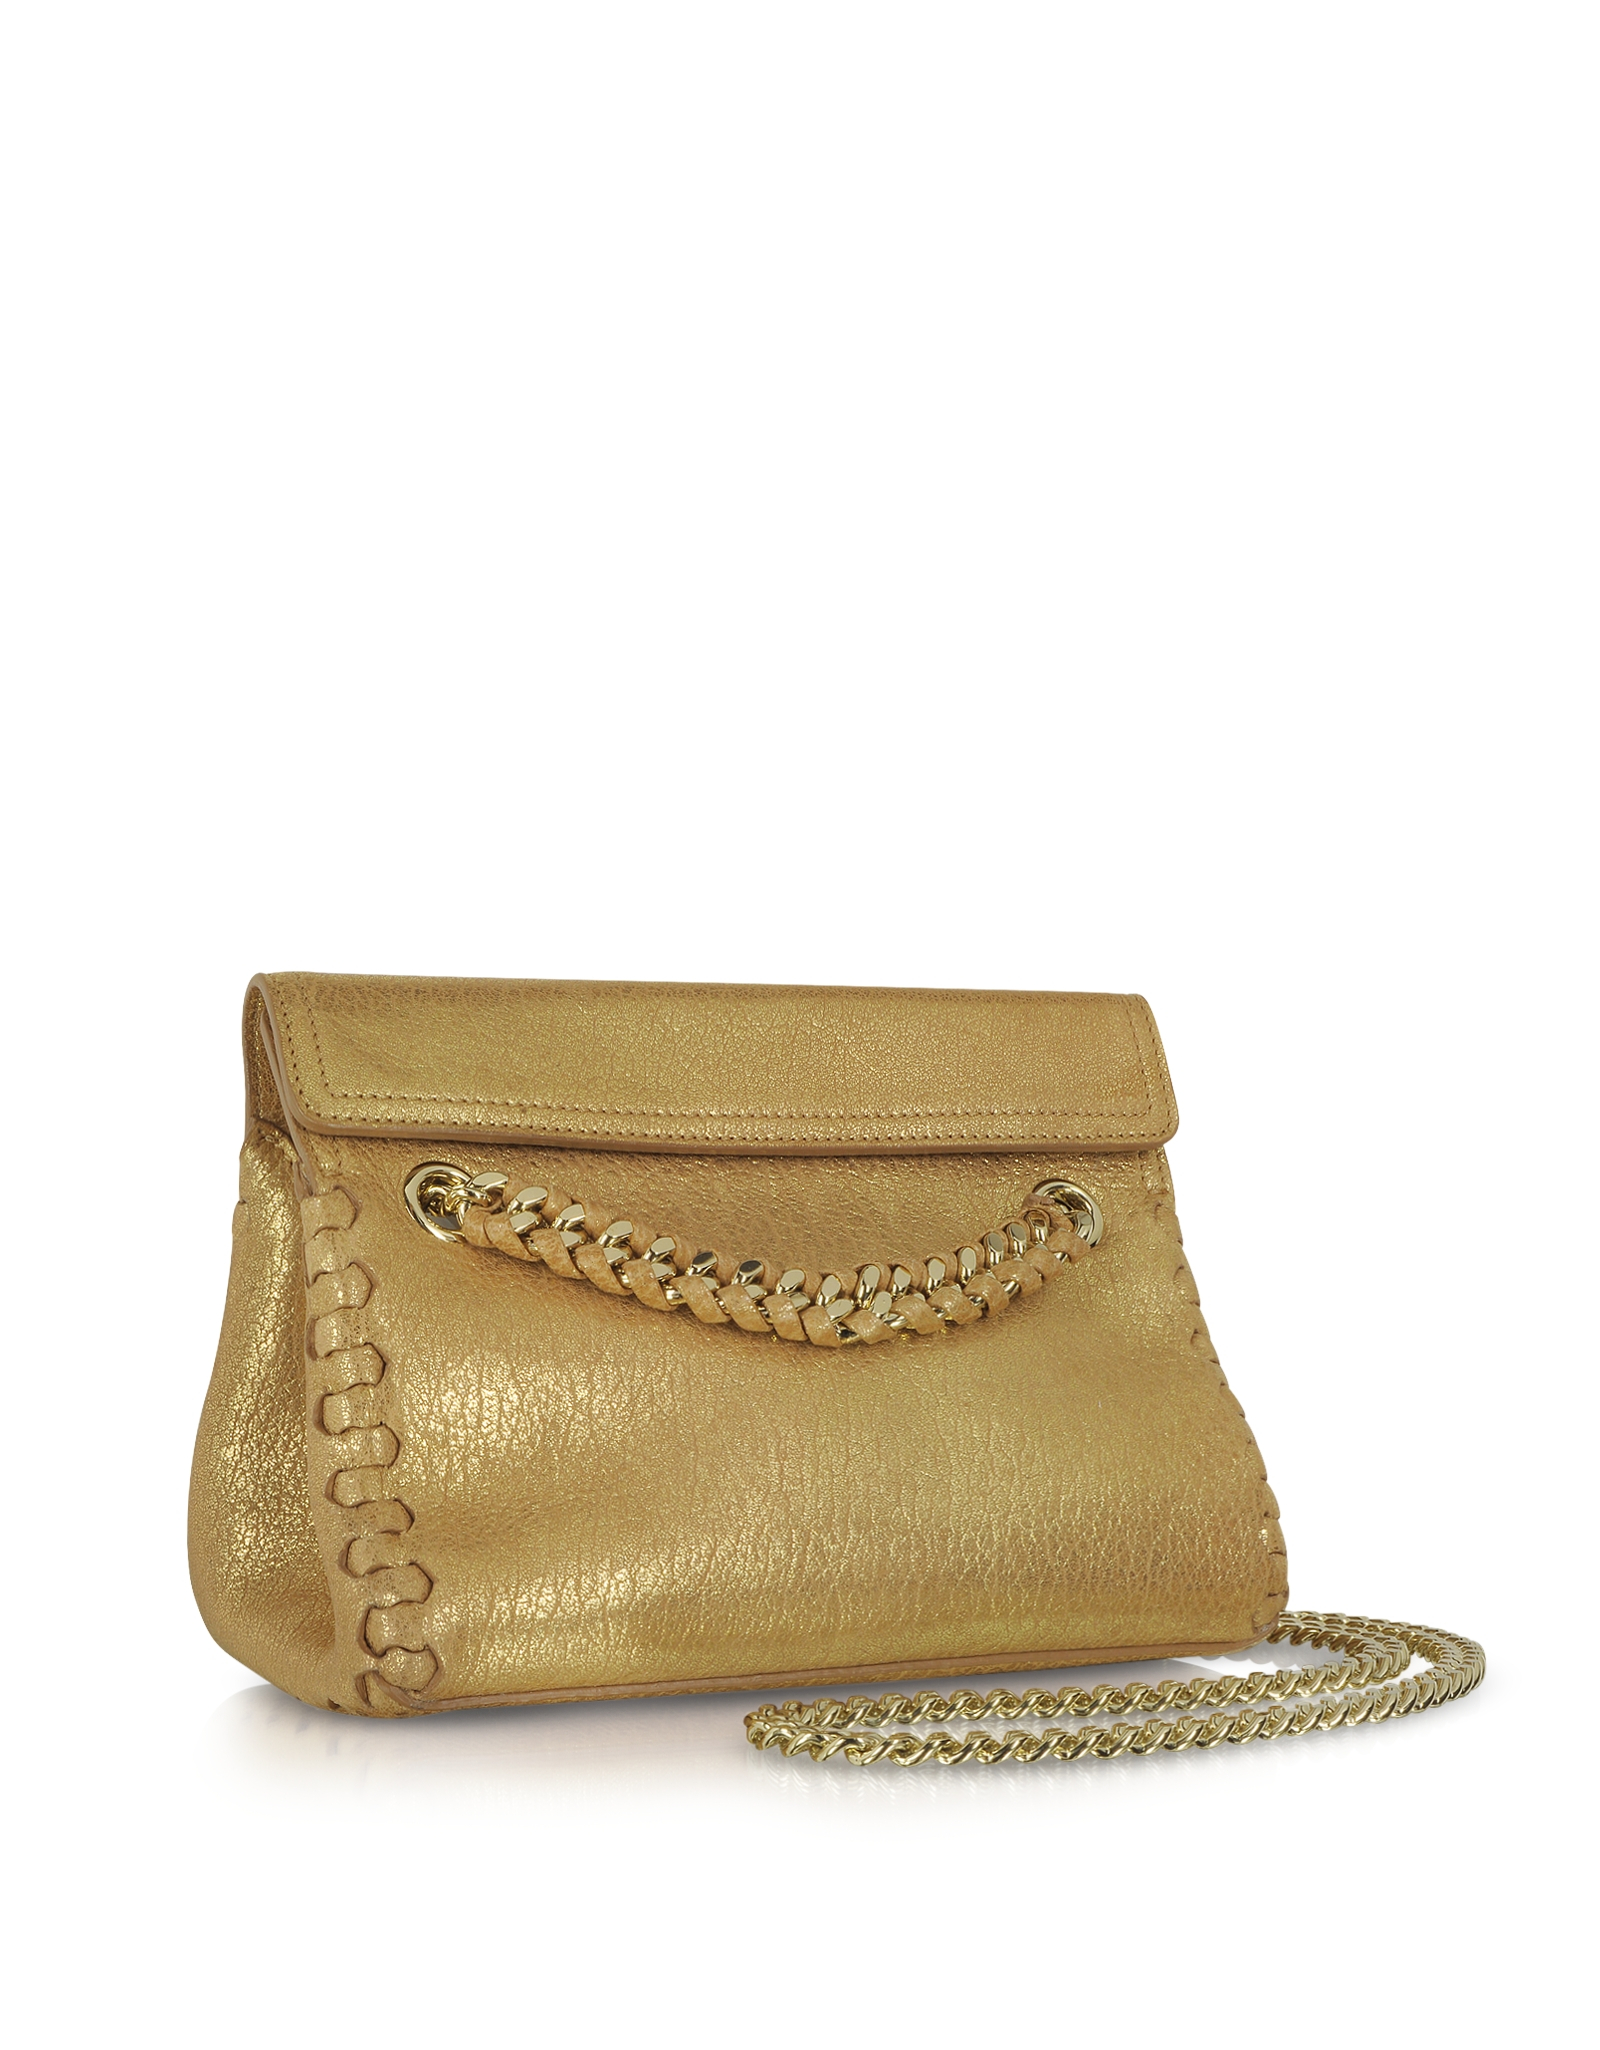 Lyst - Roberto cavalli Gold Laminated Leather Crossbody Bag W/Chain Strap in Metallic